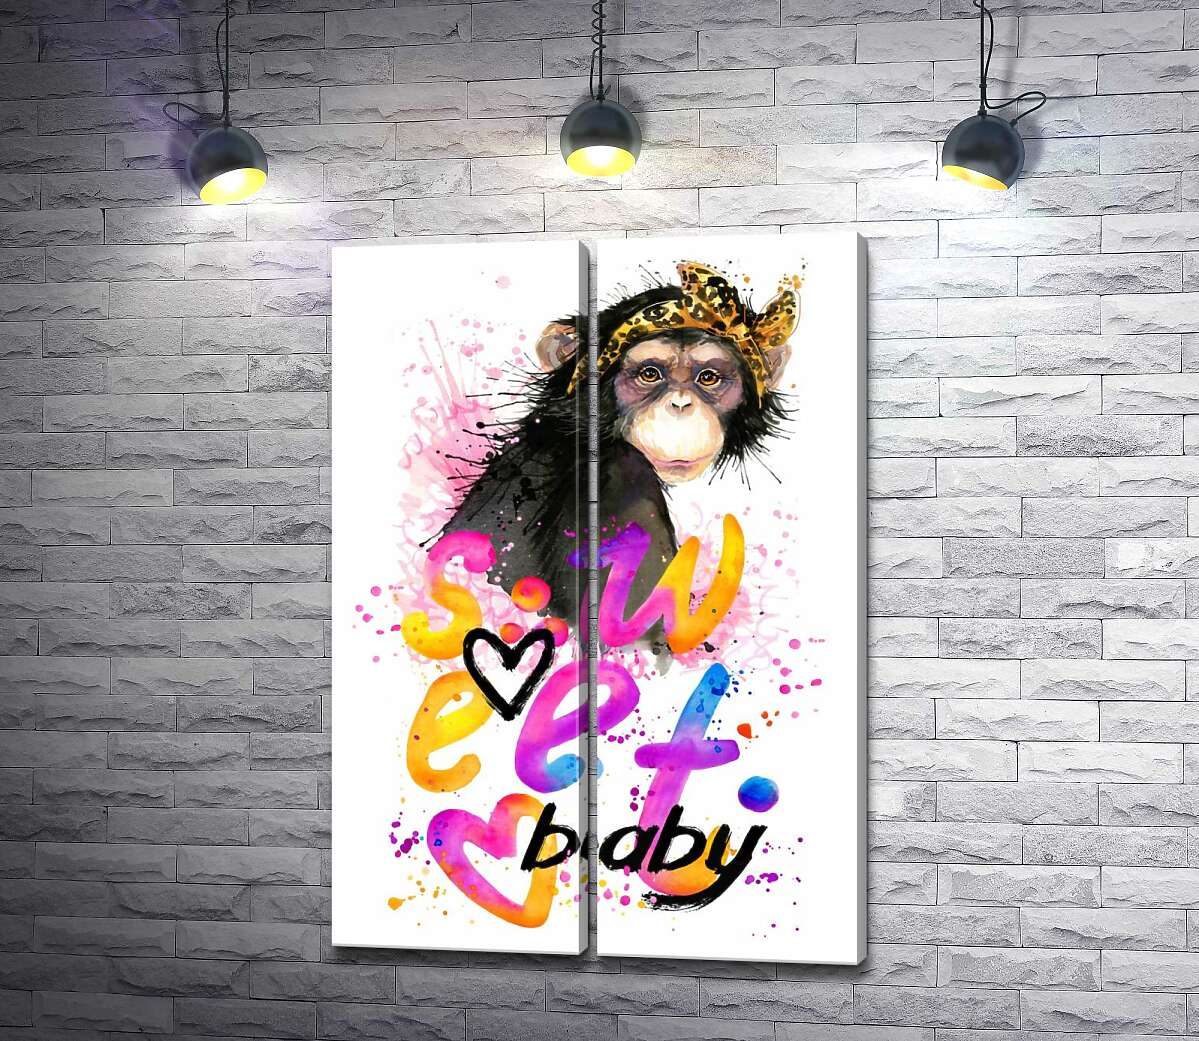 модульная картина Модная обезьяна сидит над надписью "sweet baby"